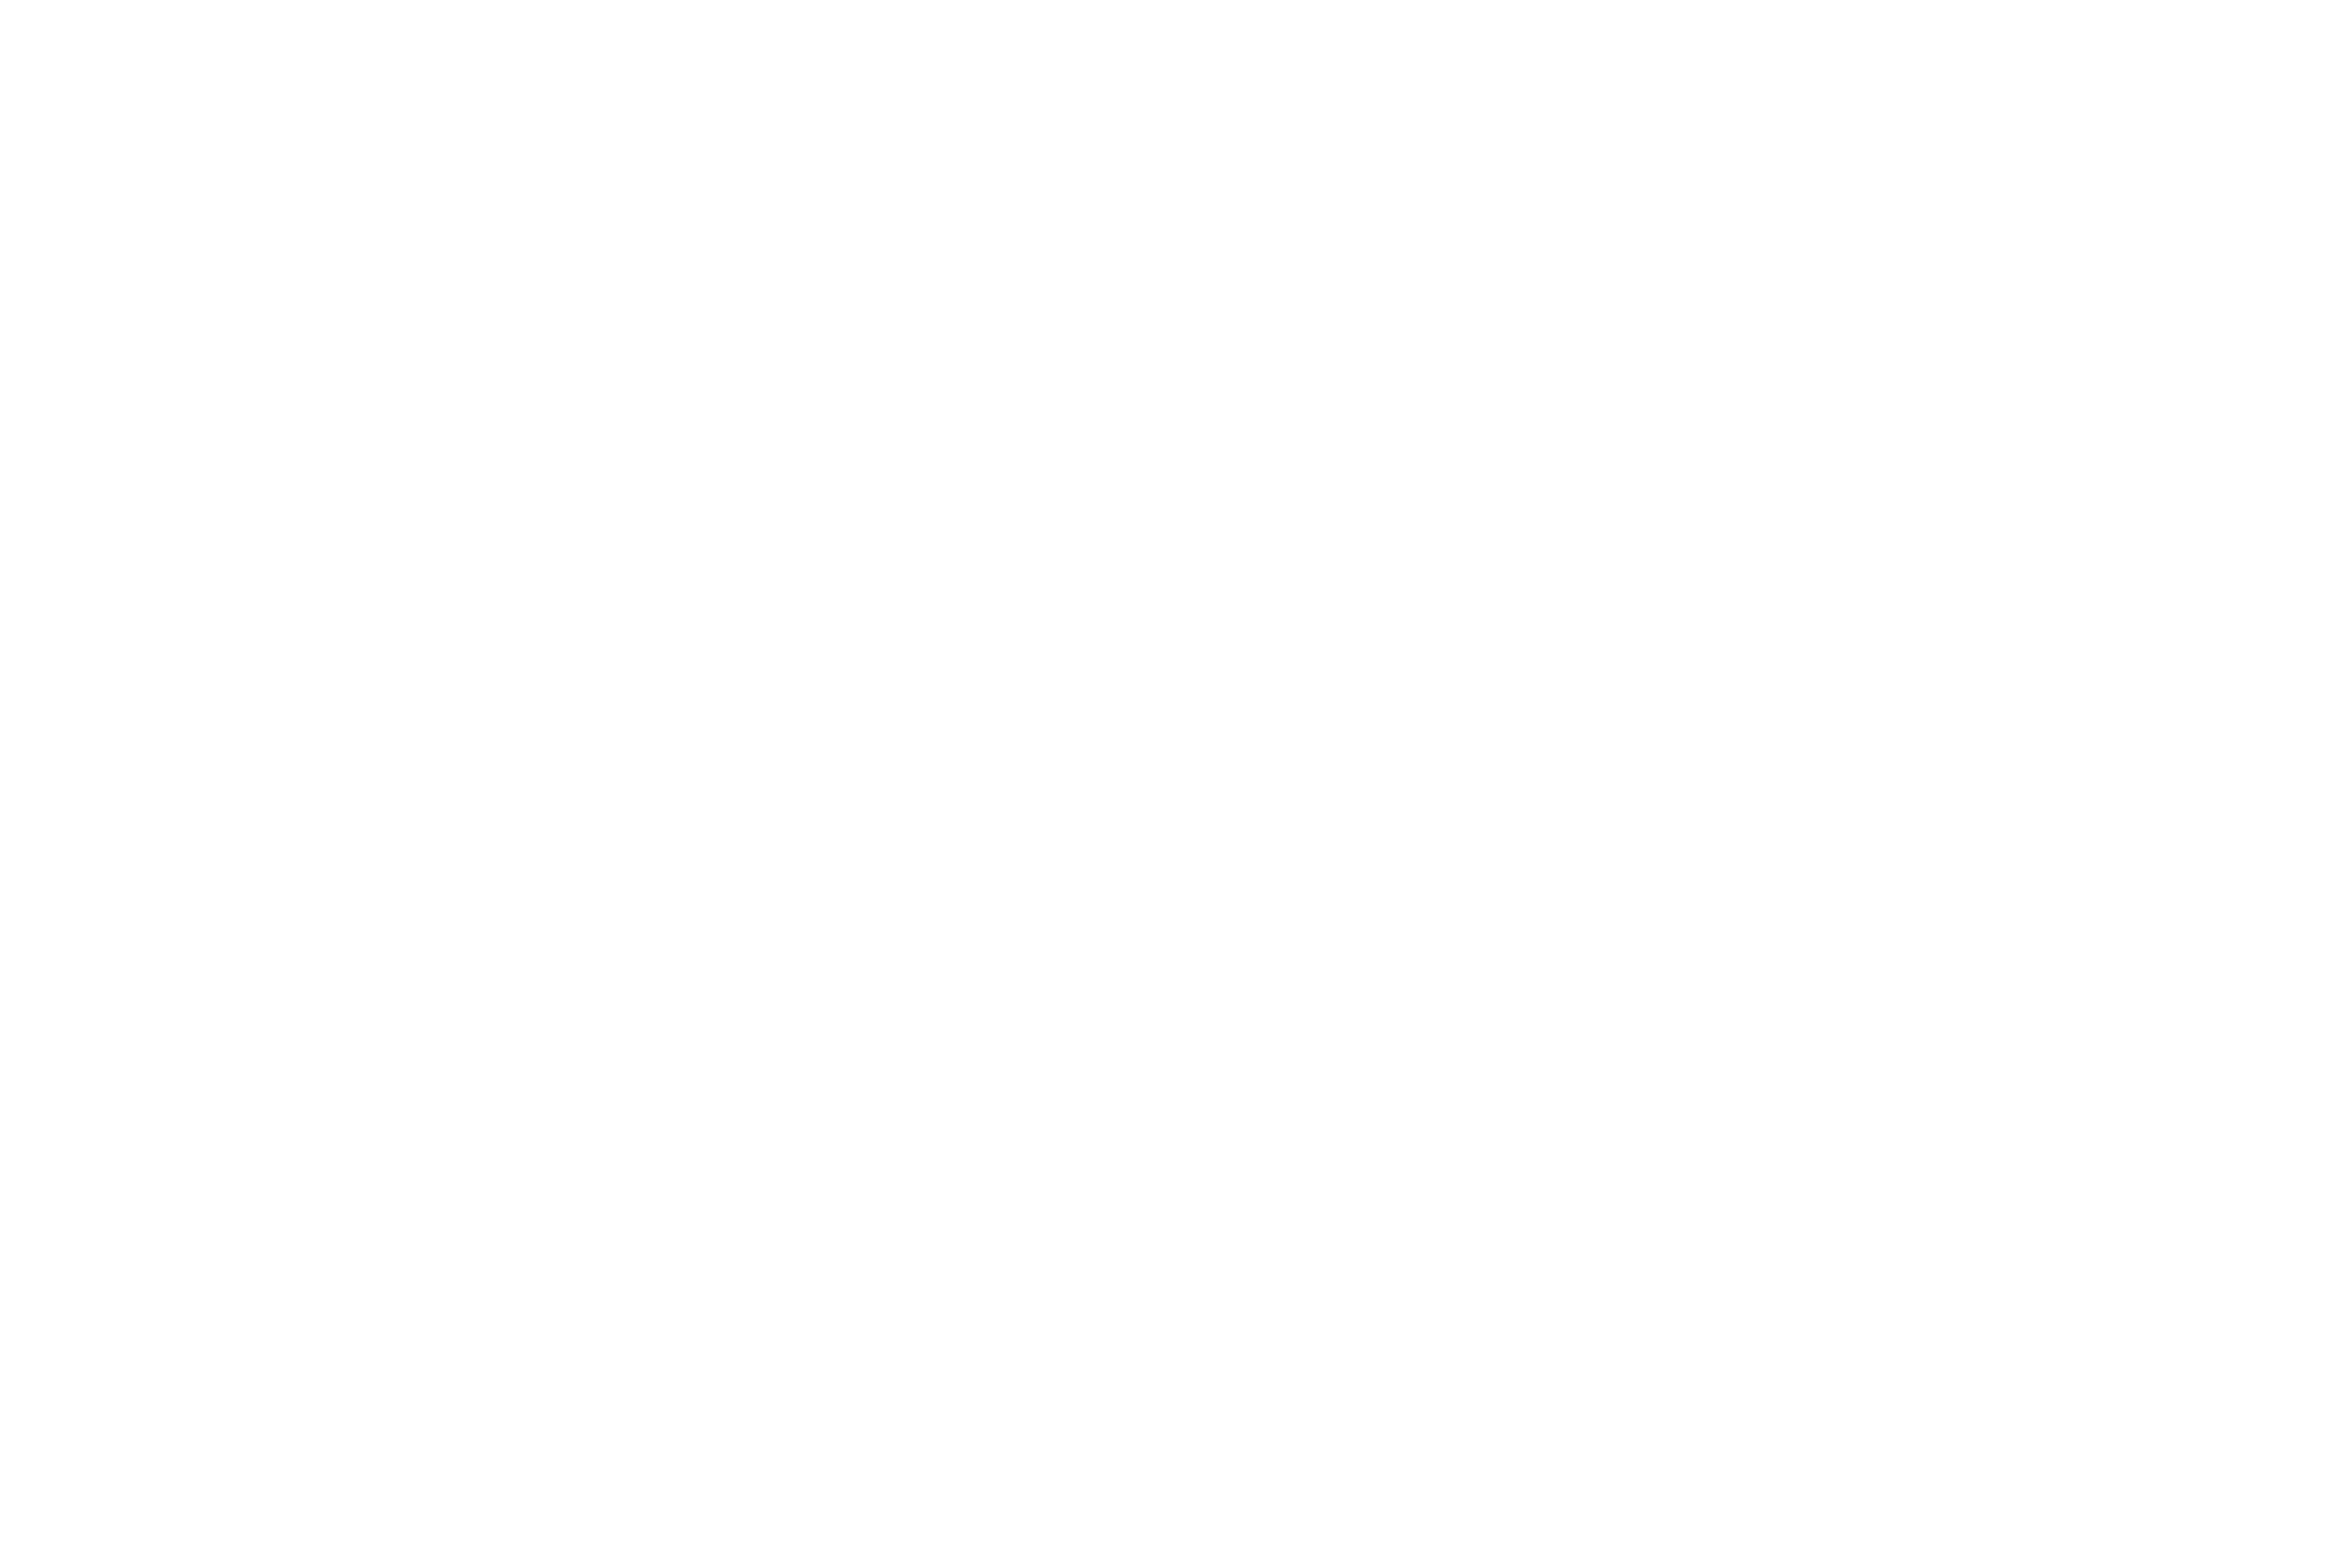 Ted Dawson Photography